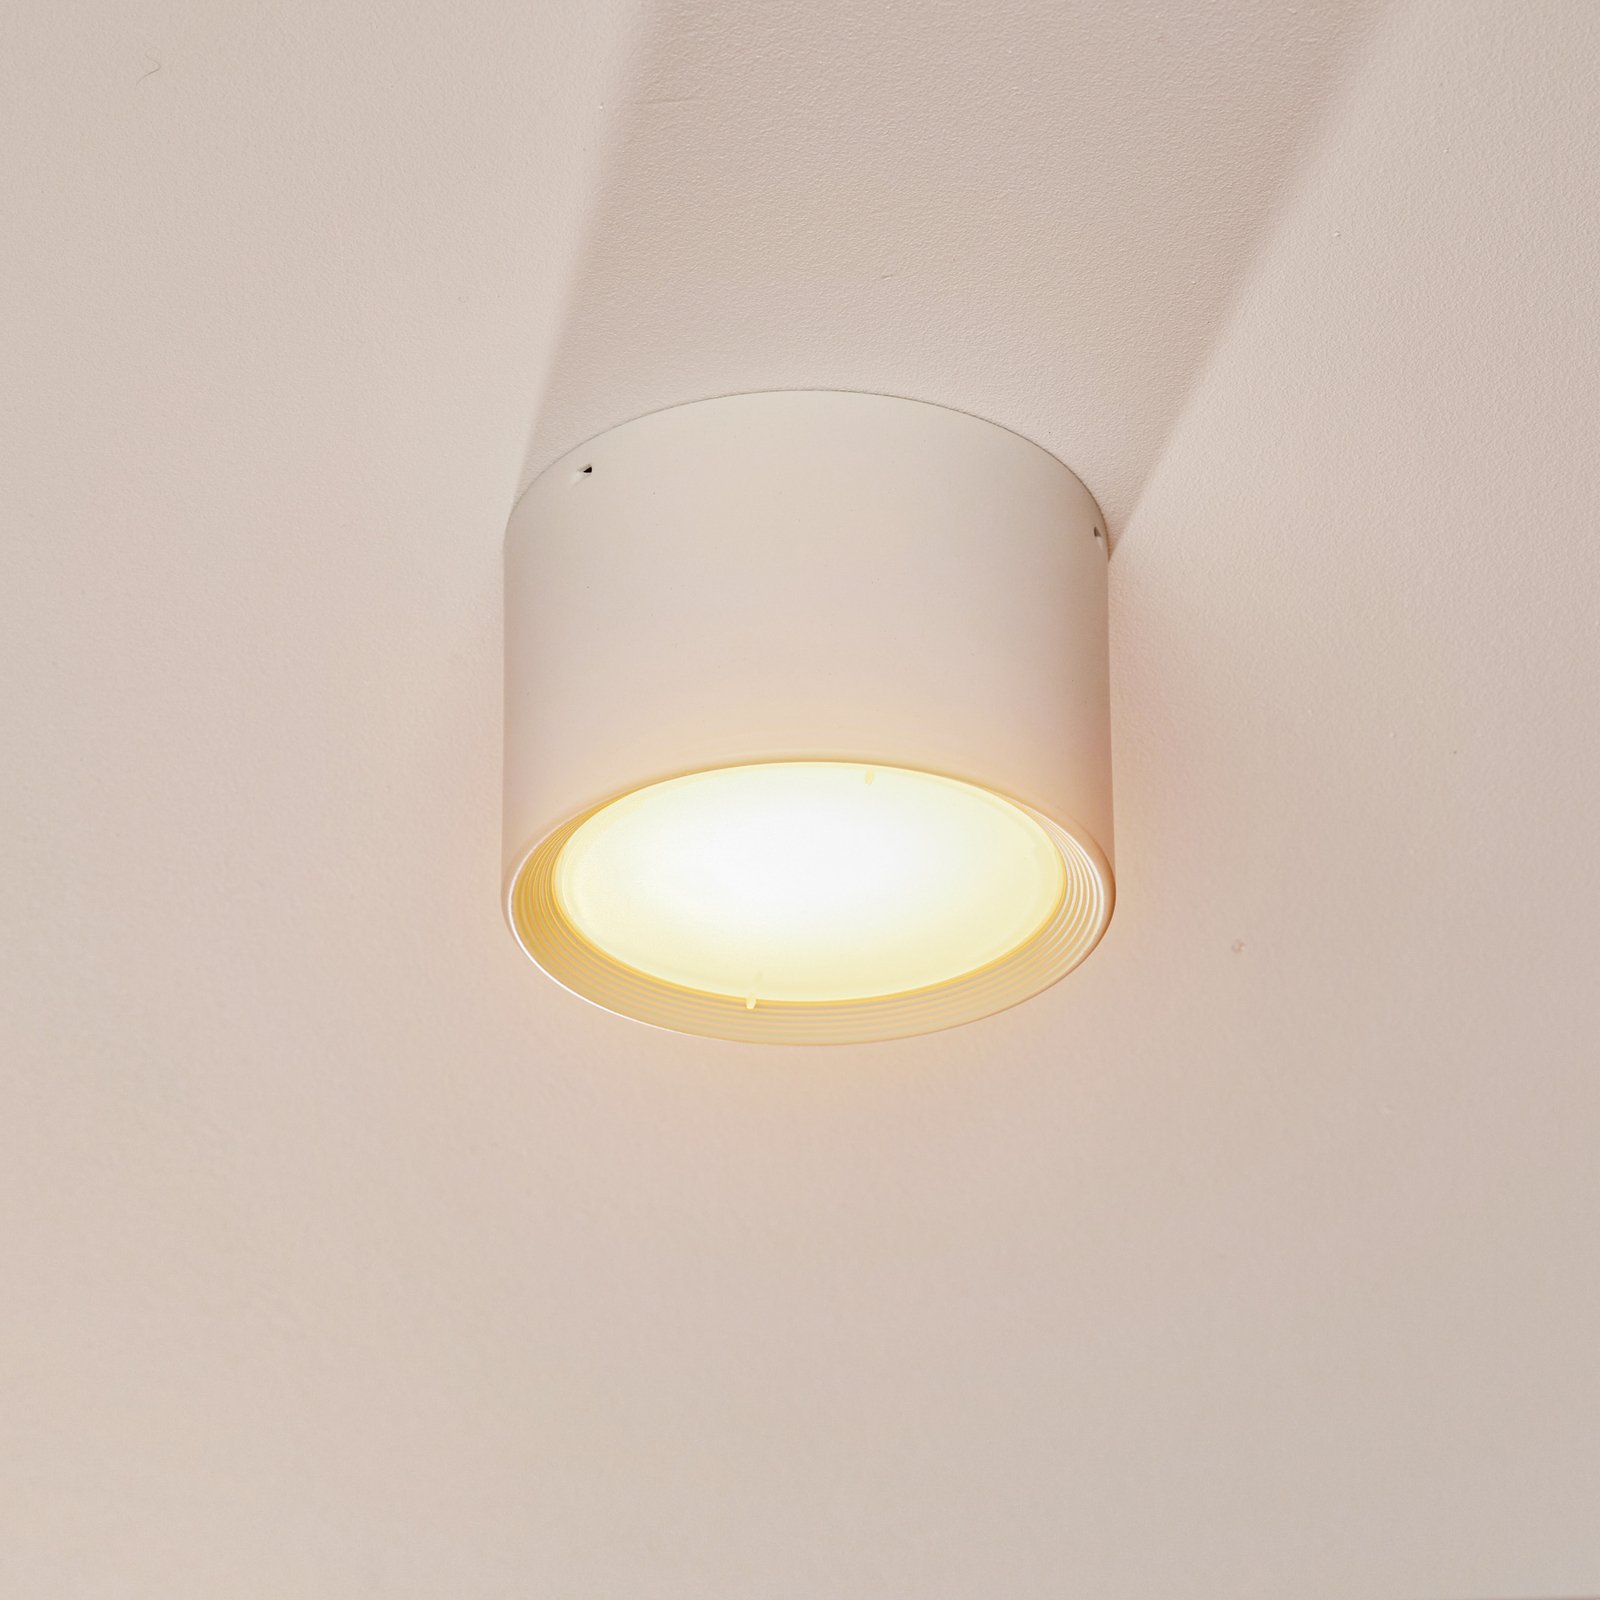 Ita LED downlight σε λευκό χρώμα με διαχύτη, Ø 12 cm